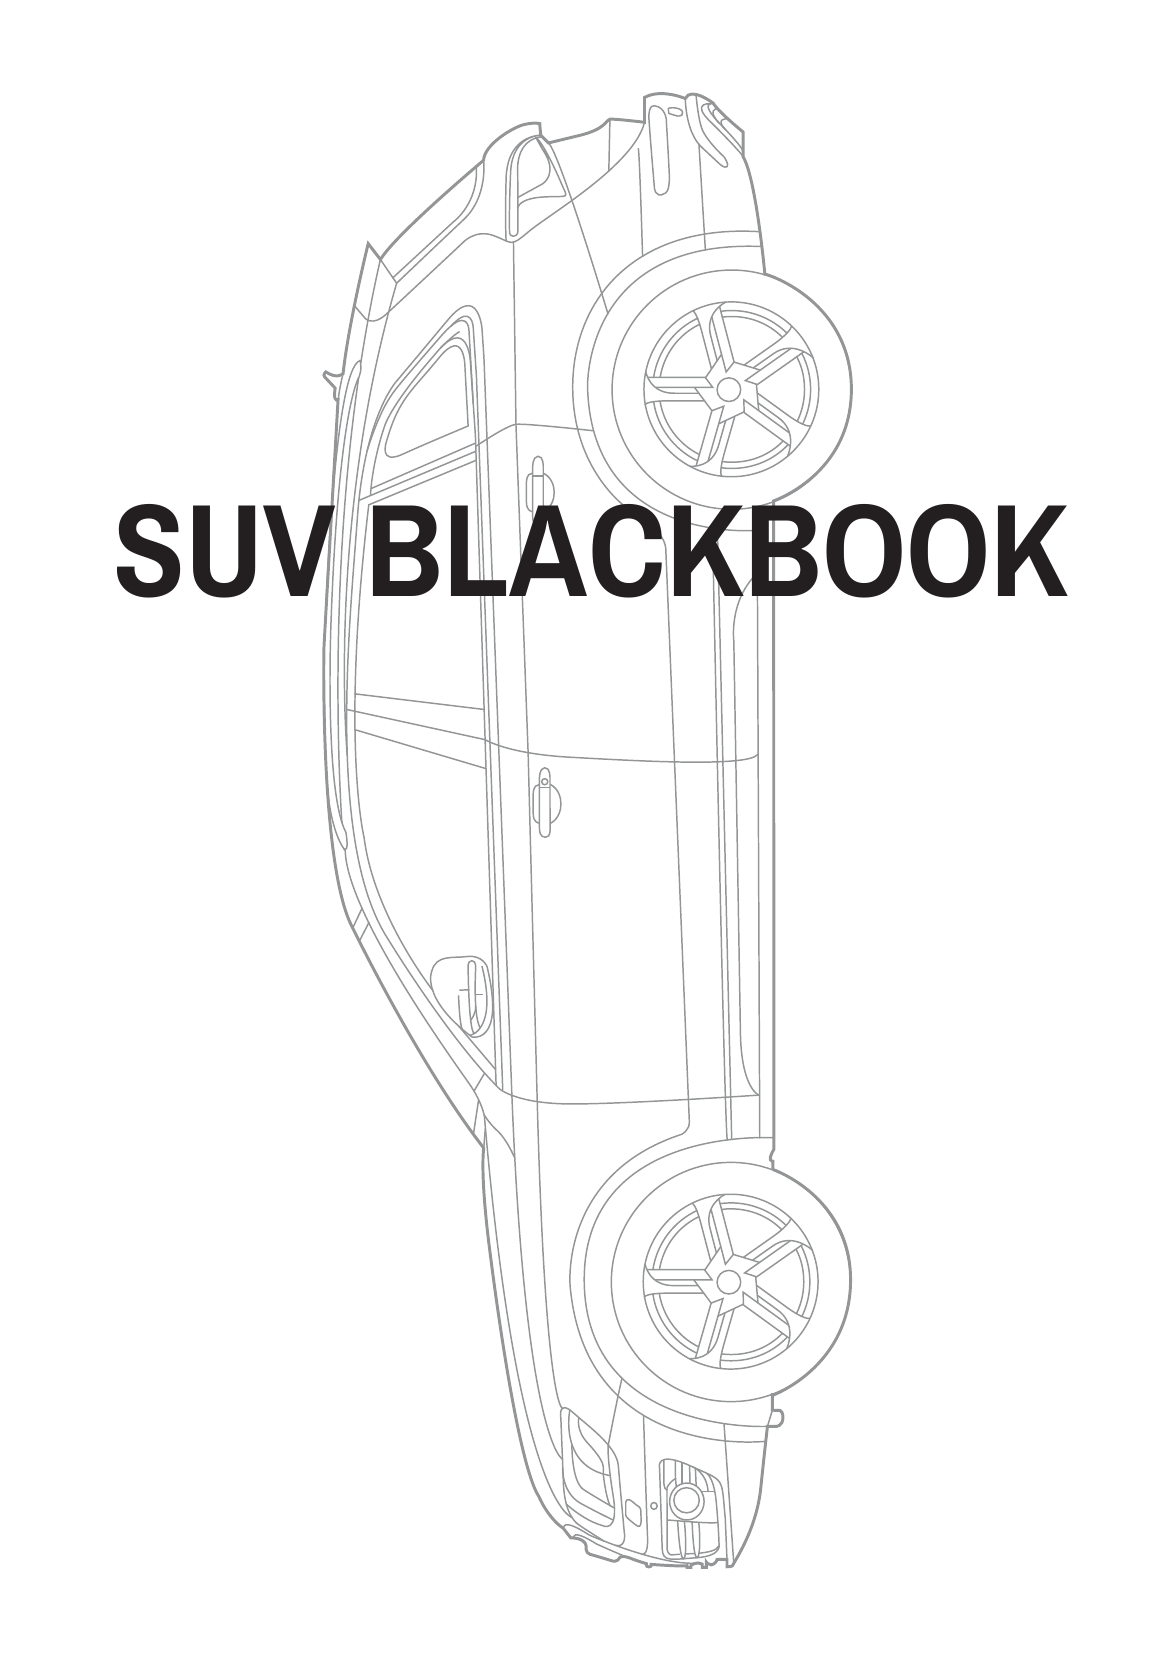 SUV Blackbook